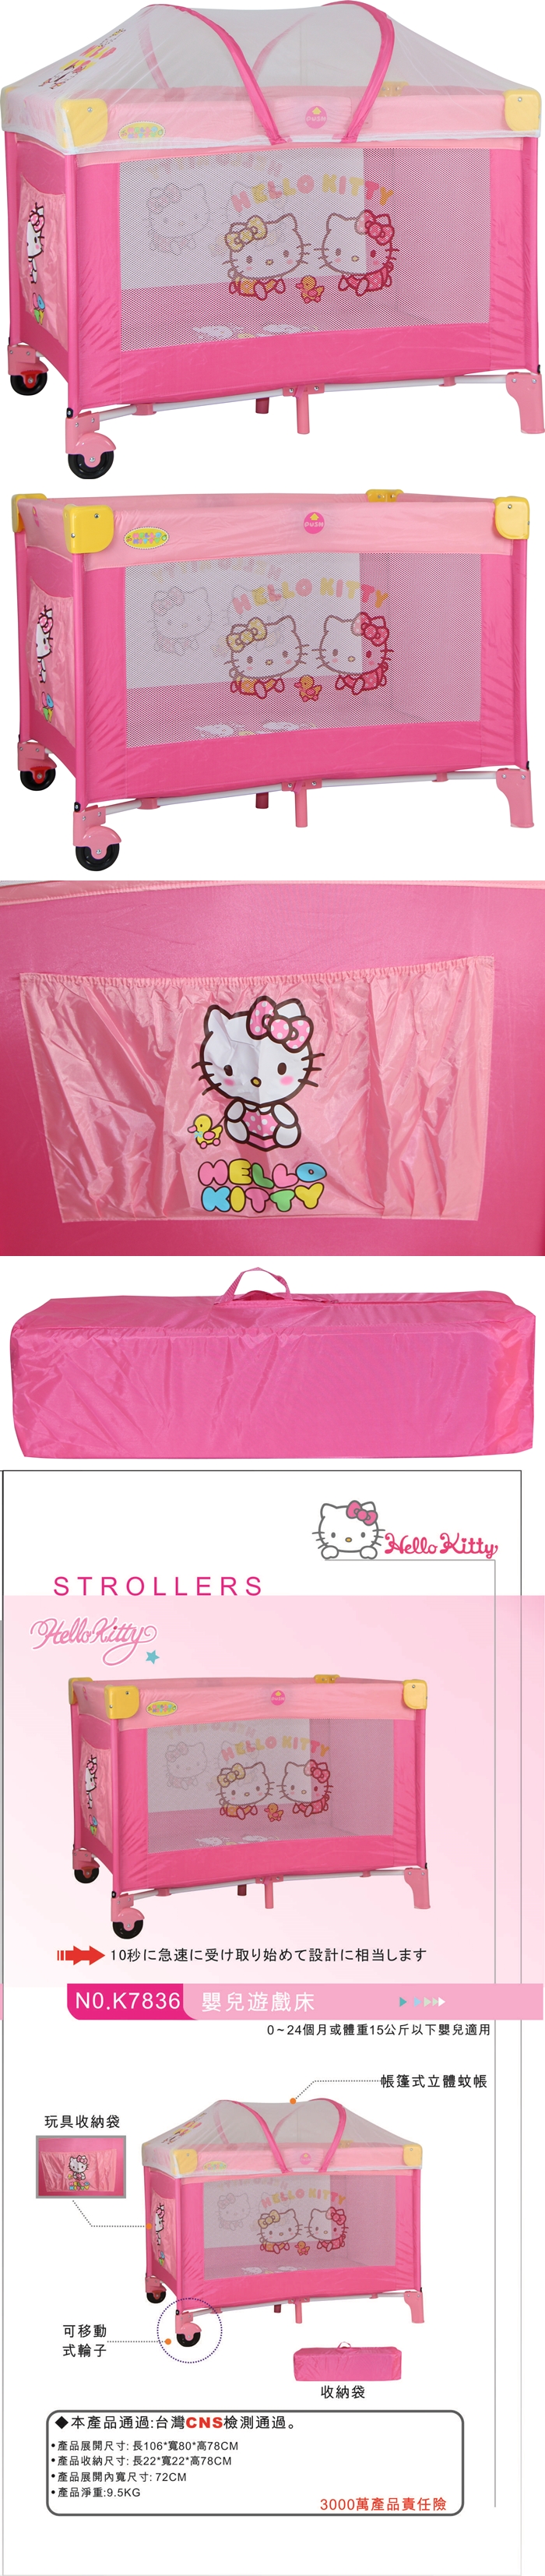 Hello Kitty凱蒂貓-嬰兒遊戲床(K7836)